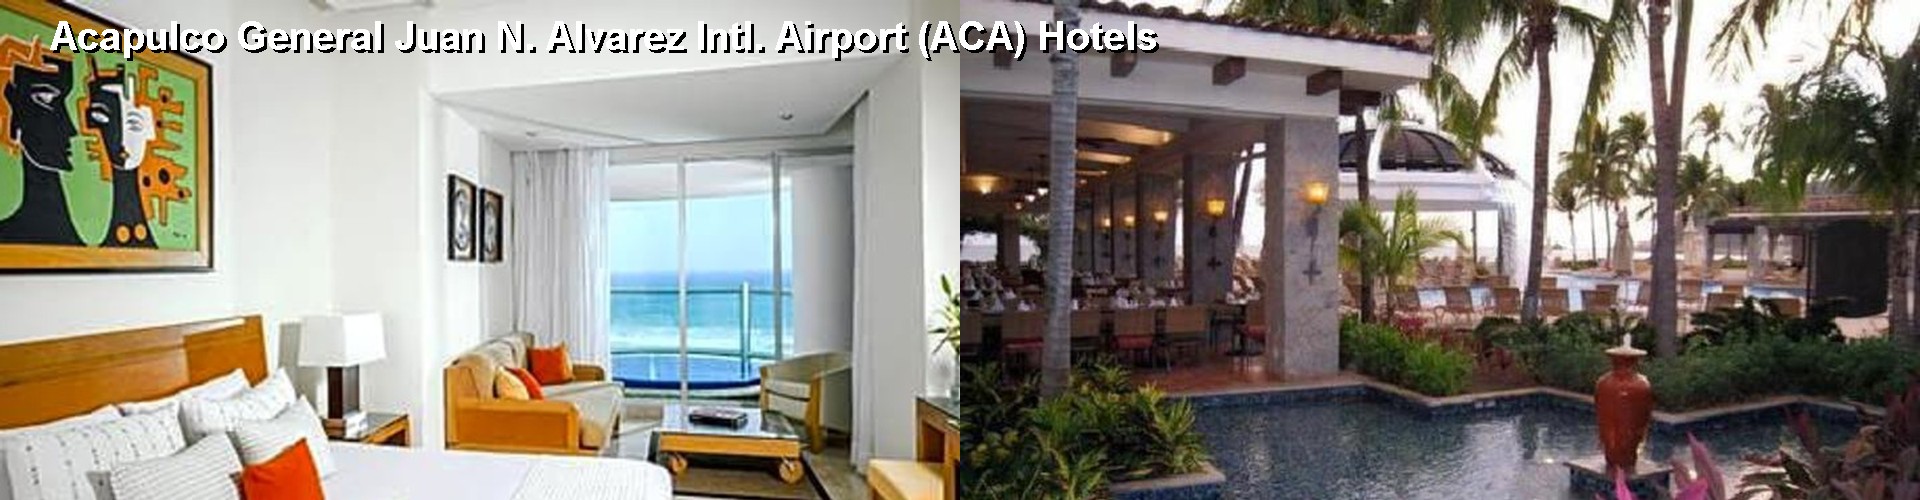 5 Best Hotels near Acapulco General Juan N. Alvarez Intl. Airport (ACA)